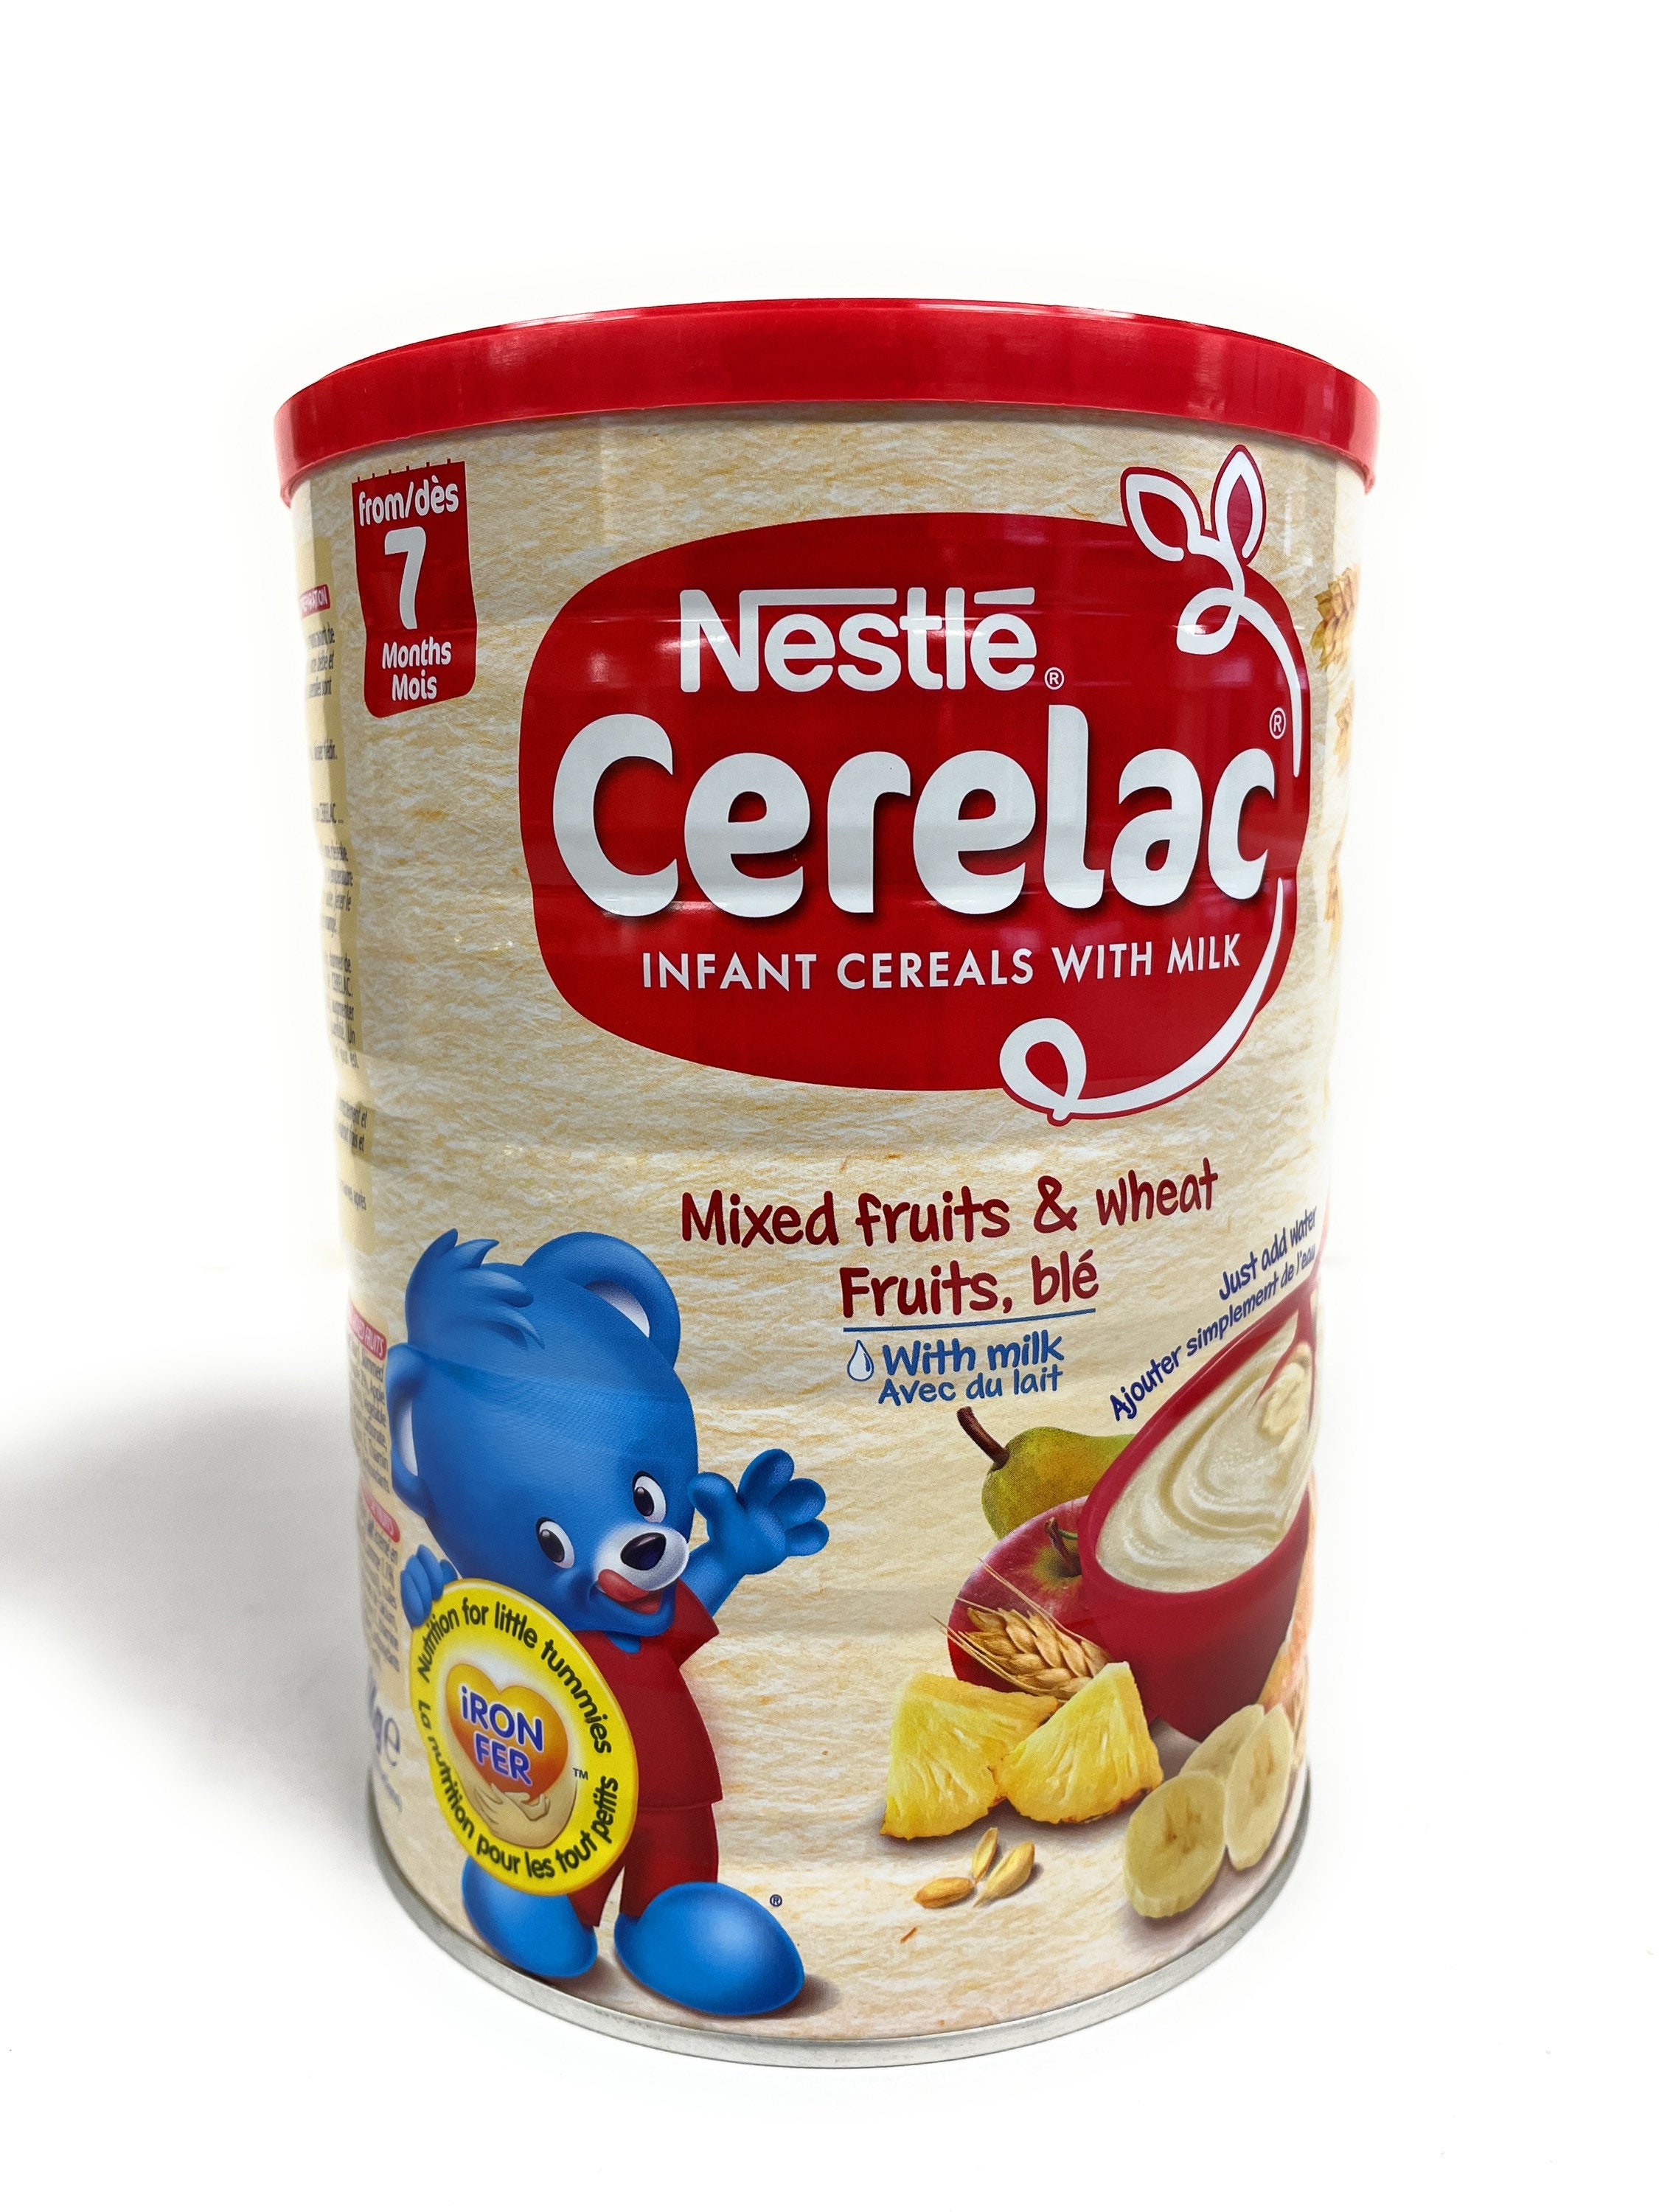 Nestlé Cerelac Fruits sac en boîte, 12 - 24 mois